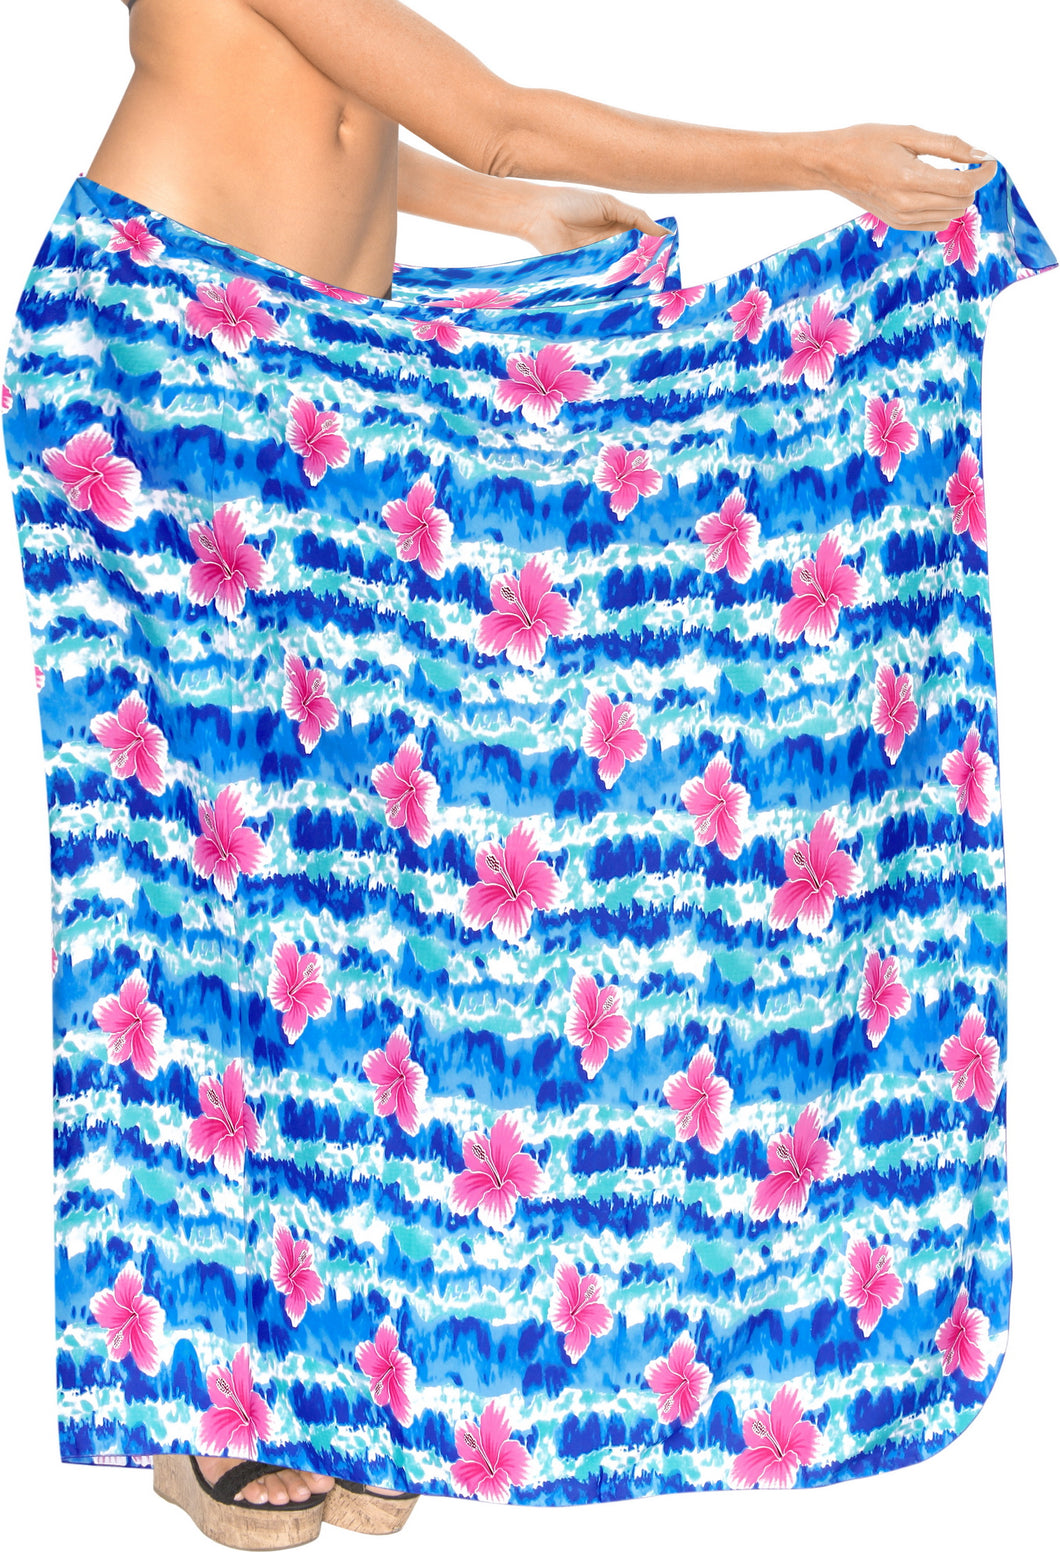 LA LEELA Women's Sarong Swimsuit Cover Up Summer Beach Wrap One Size Blue_Z113